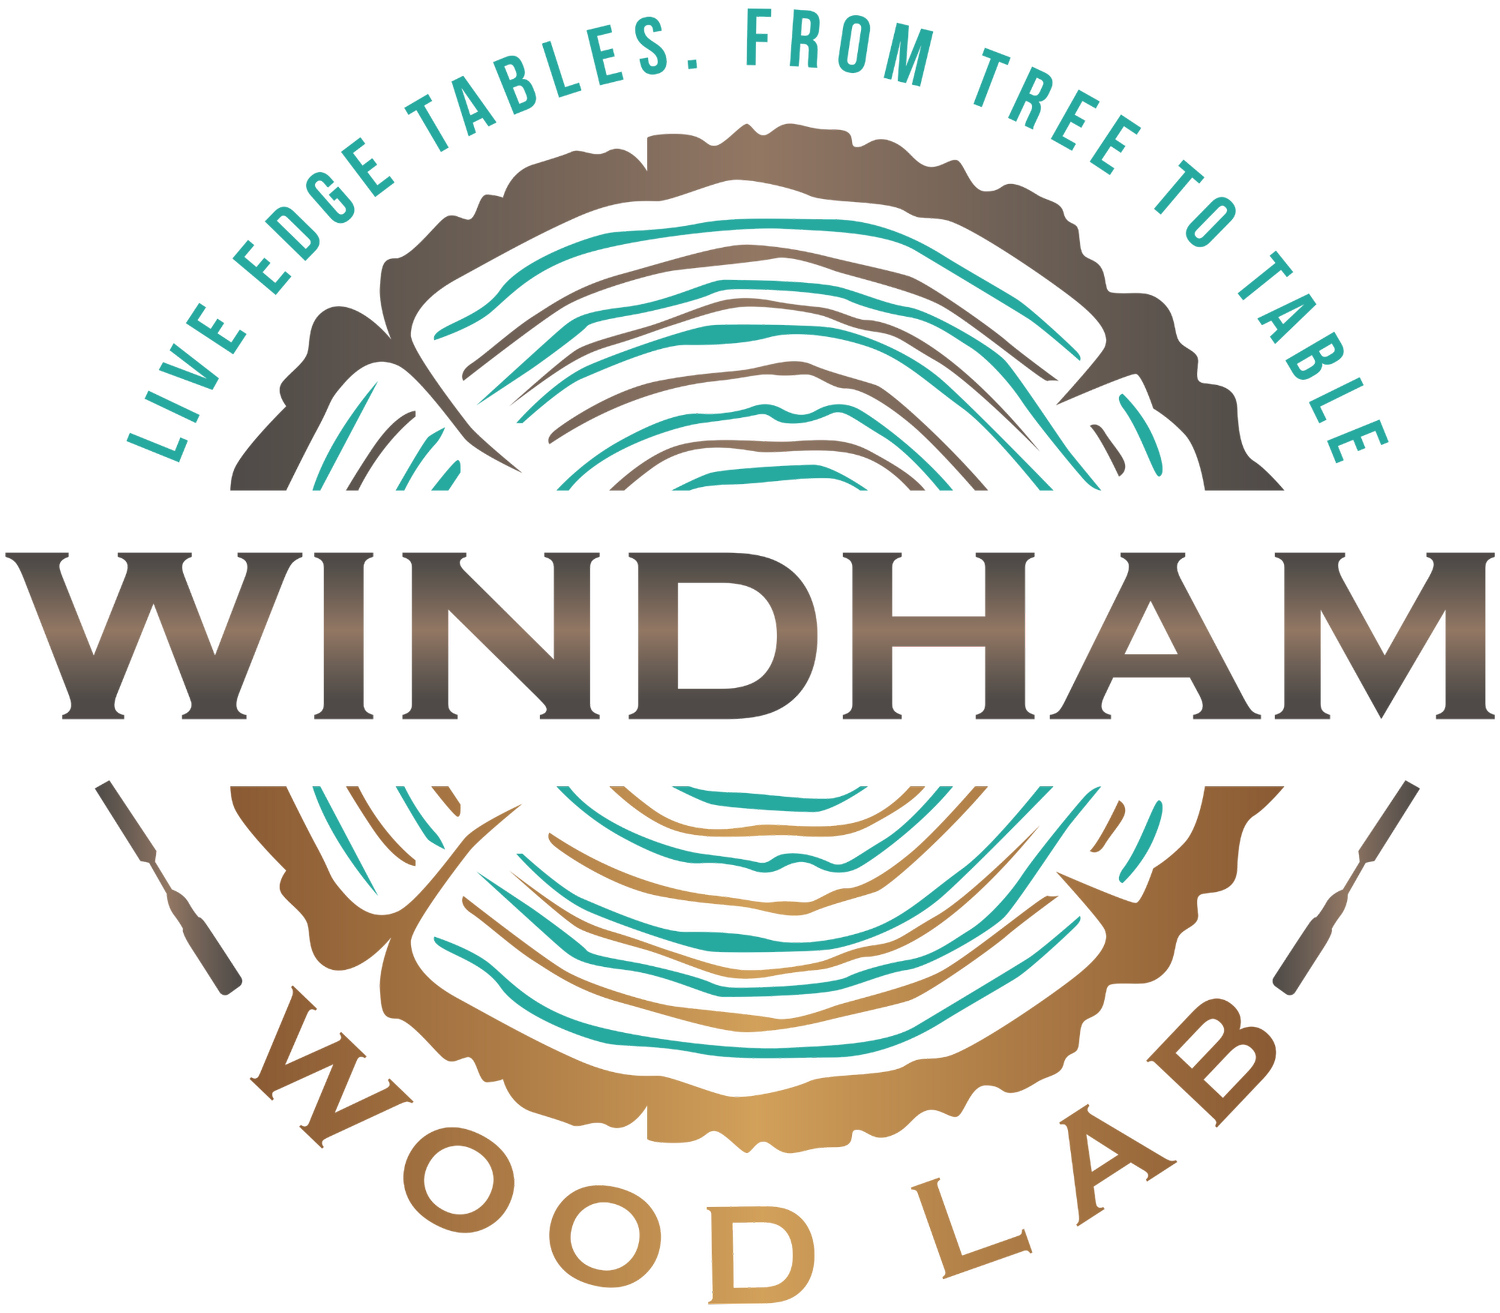 Windham Wood Lab